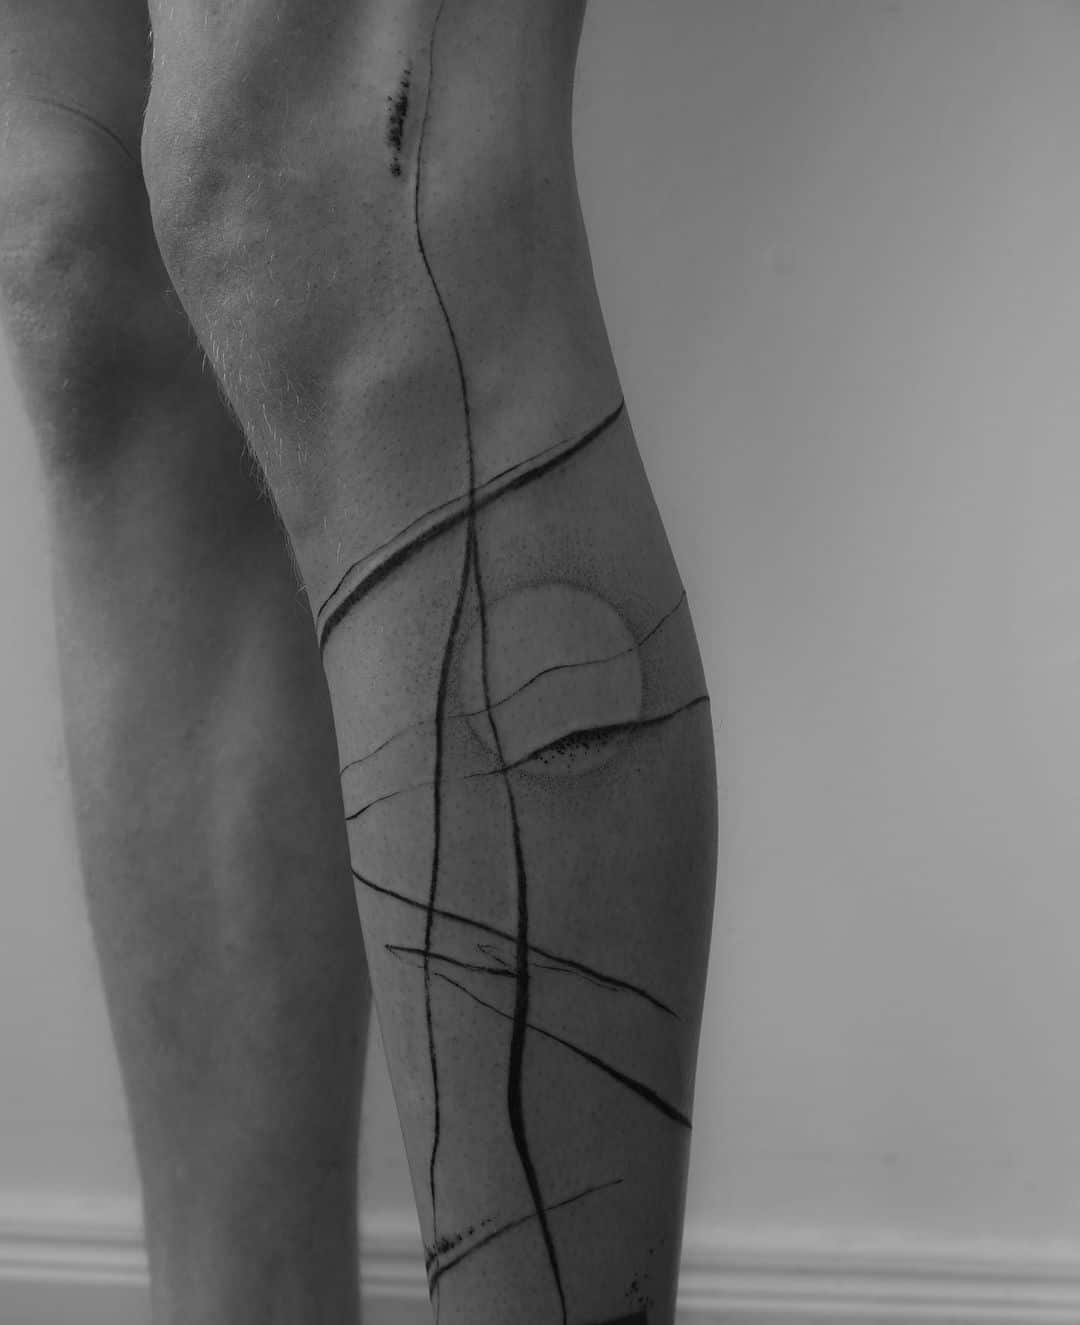 Abstract leg tattoo by dianaveidenthaler.ink